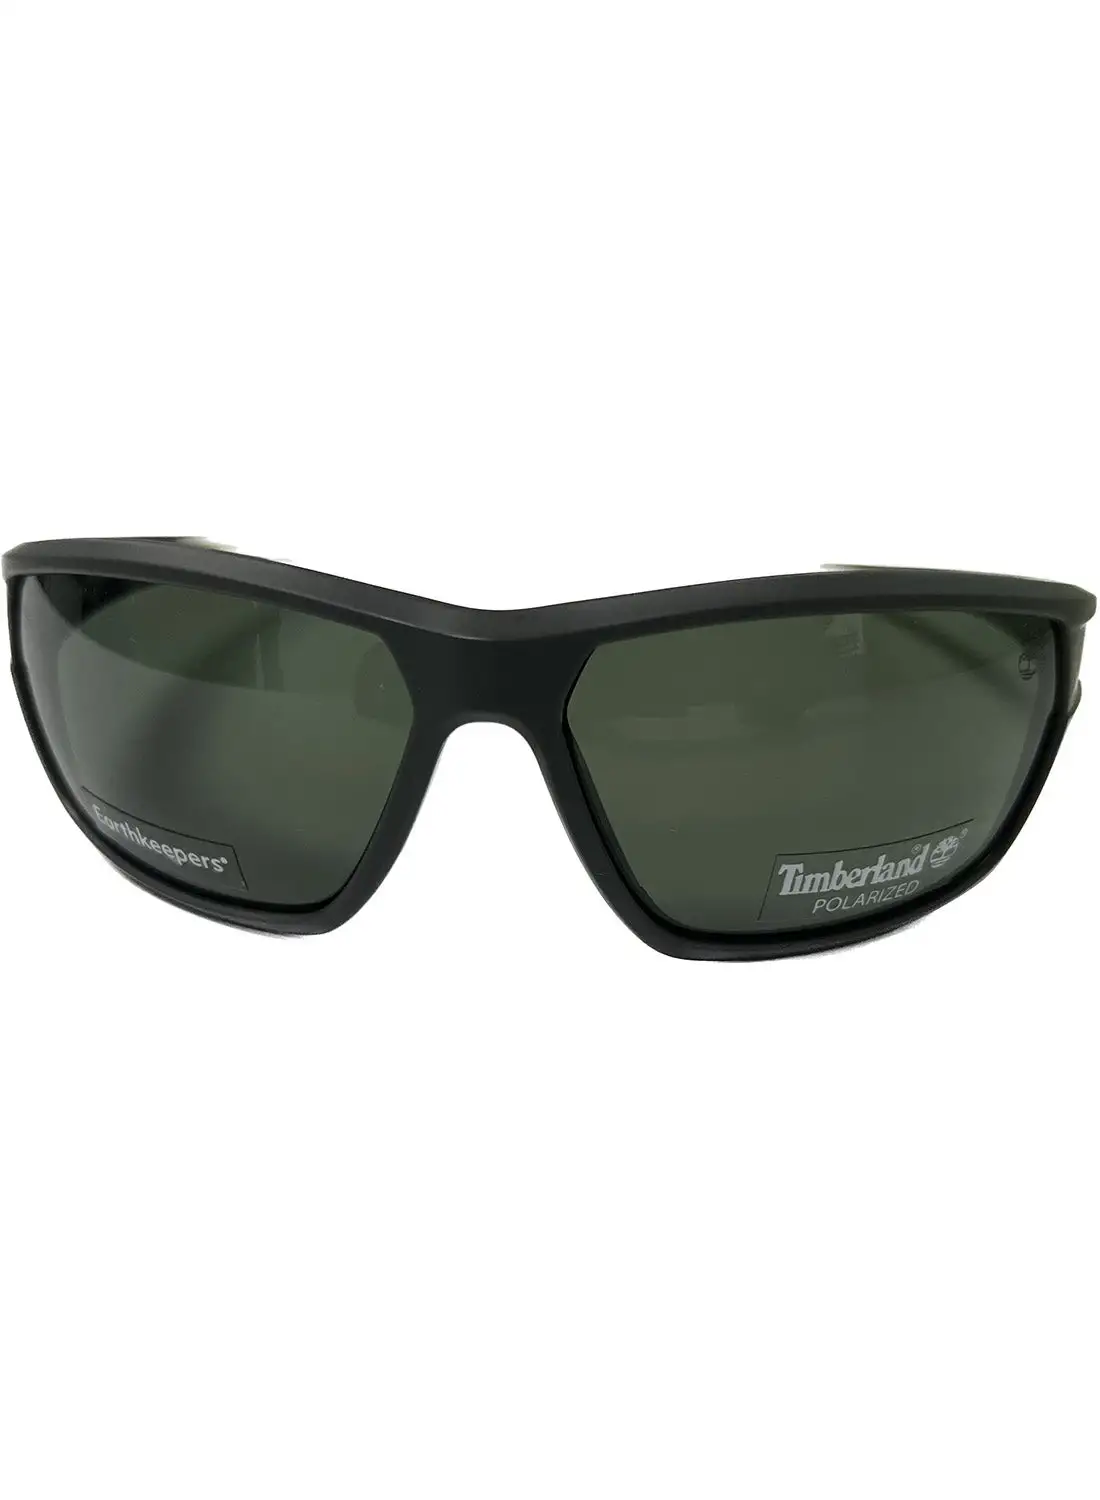 Timberland Men's Rectangular Sunglasses - TB926320R66 - Lens Size: 66 Mm